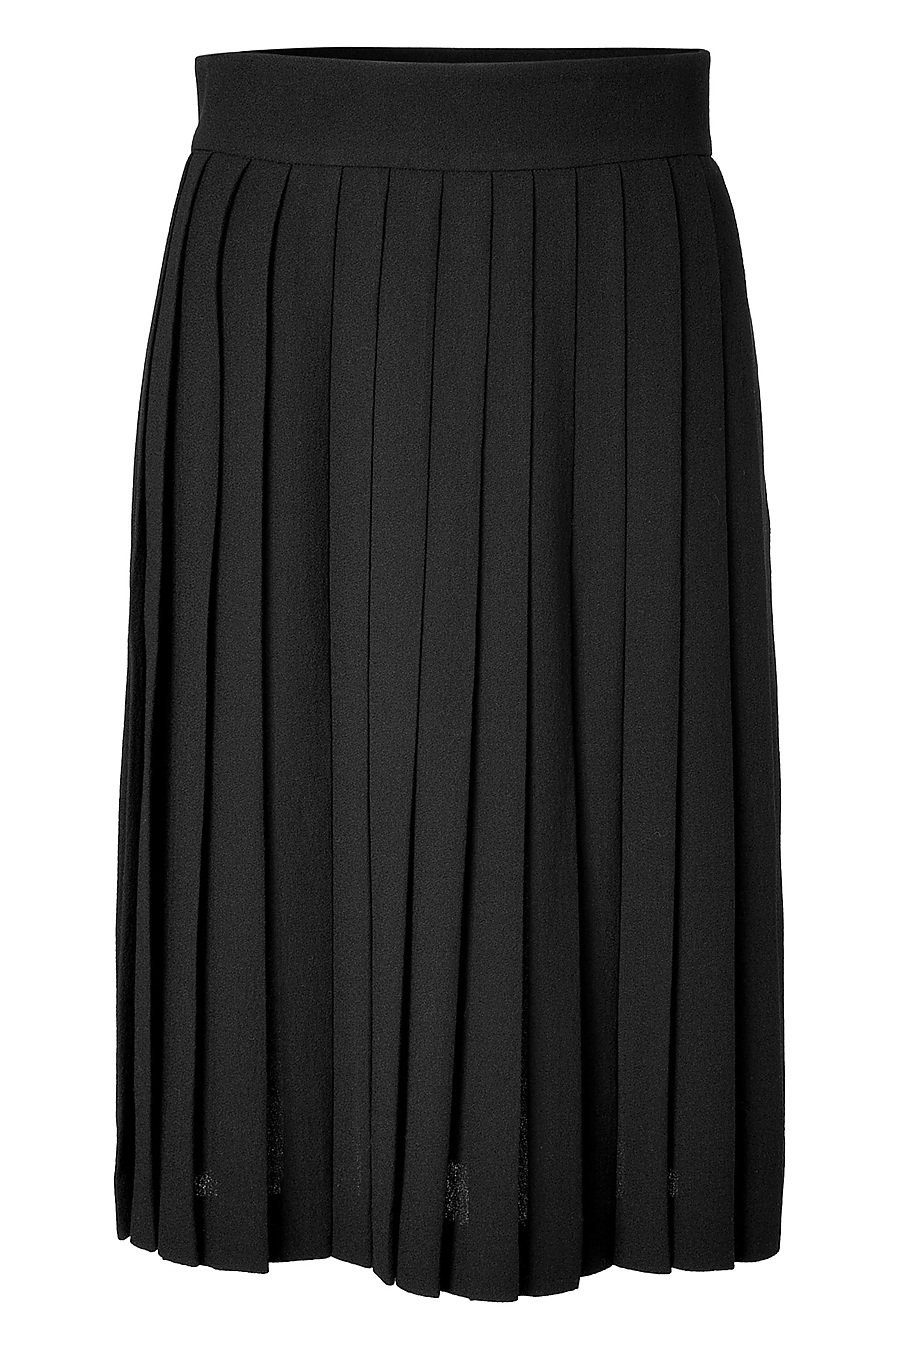 Fausto Puglisi Wool Pleated Skirt | ModeSens